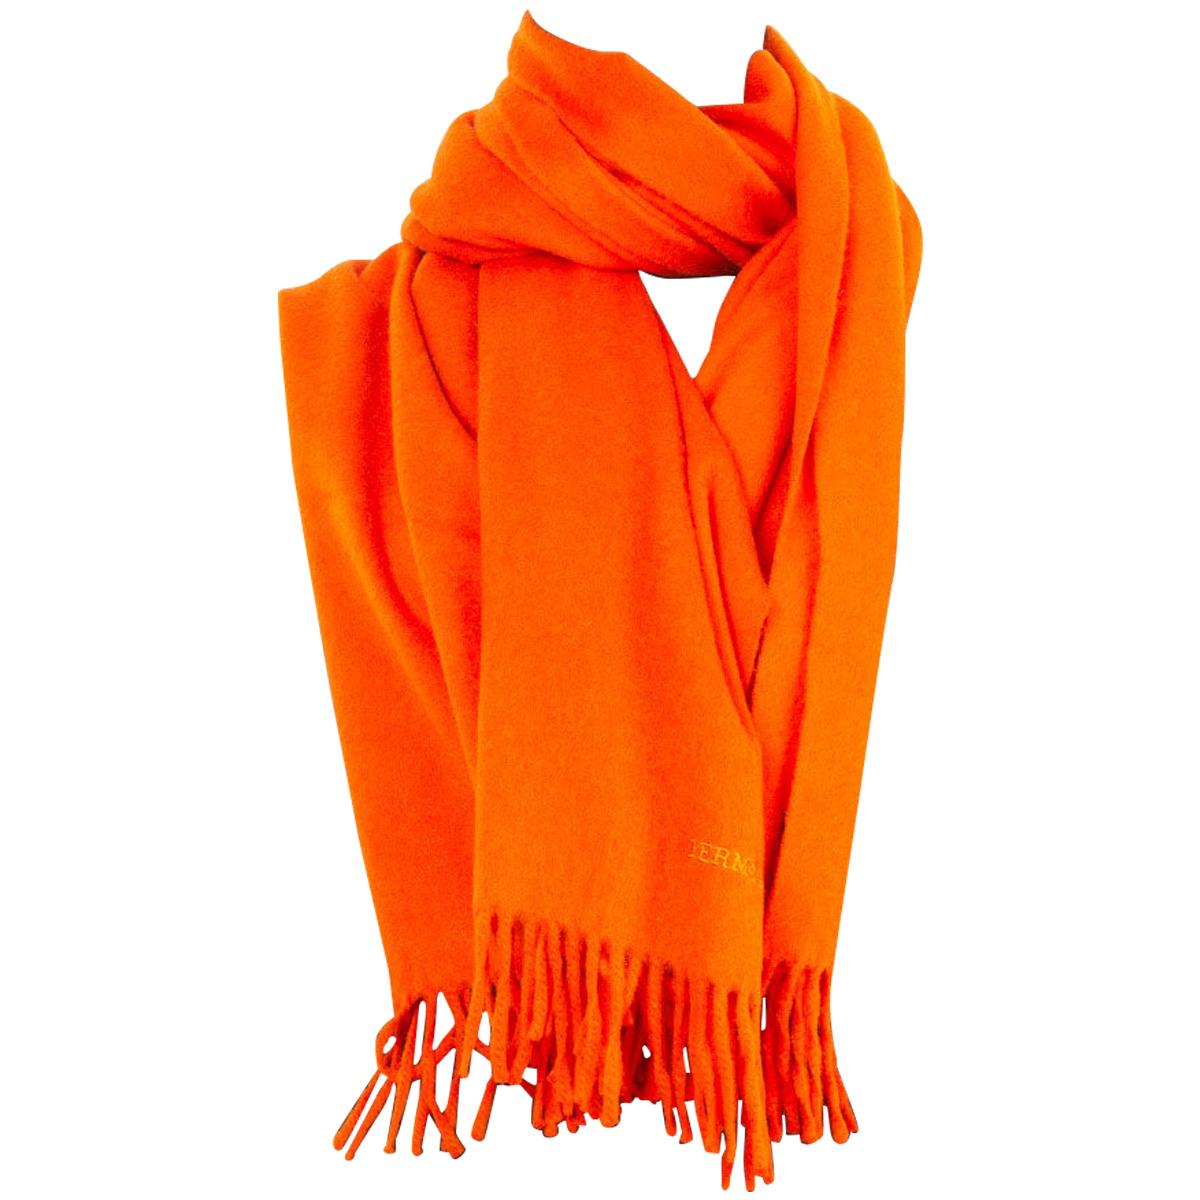 HERMÈS Hermes scarf  100% CASHMERE scarf with tassles 60" x 15" w Purple ref LDP 